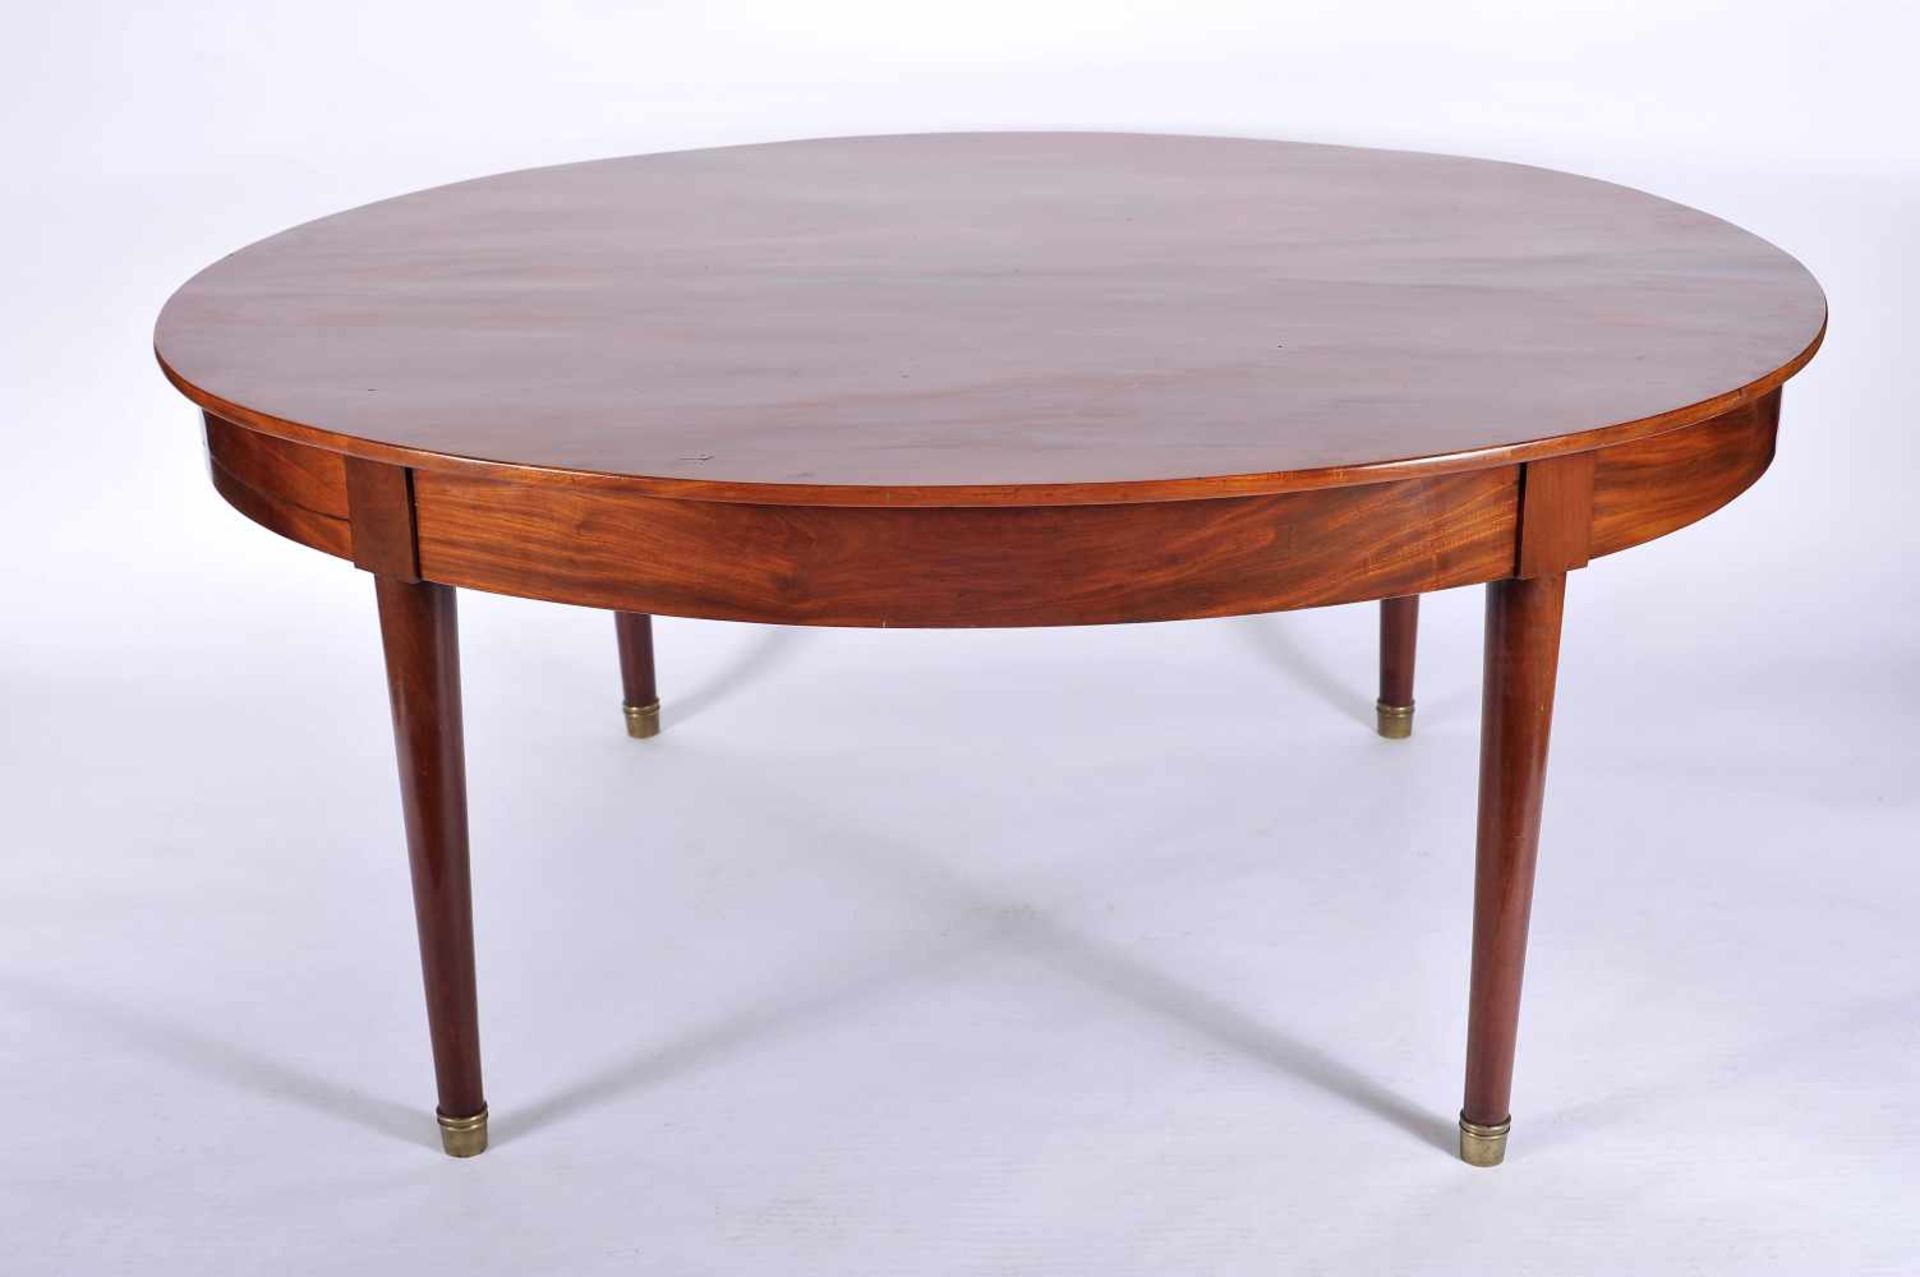 An Oval Table, mahogany, legs with bronze caps, European, 19th C., small restoration, Dim. - 72 x - Bild 2 aus 2